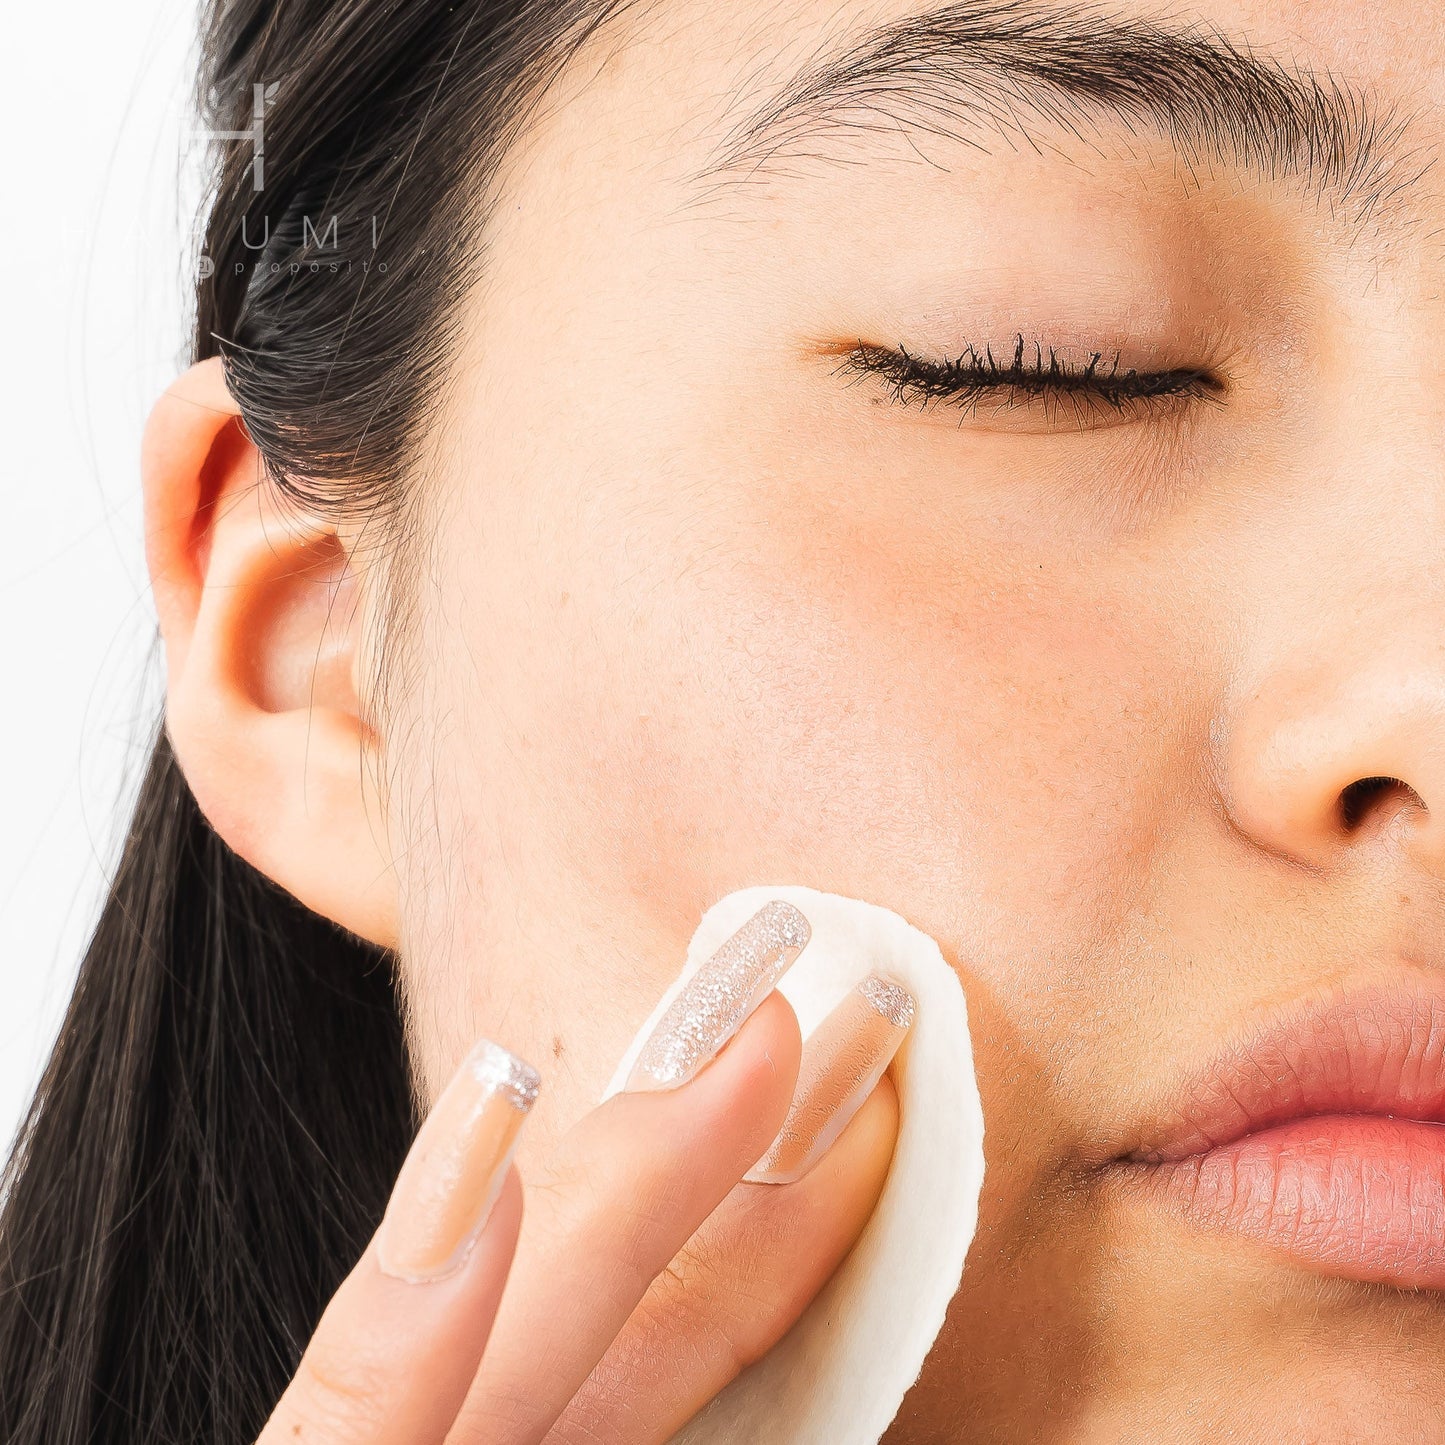 Apieu Vitamin AC Pad Skincare maquillaje productos de belleza coreanos en Colombia kbeauty